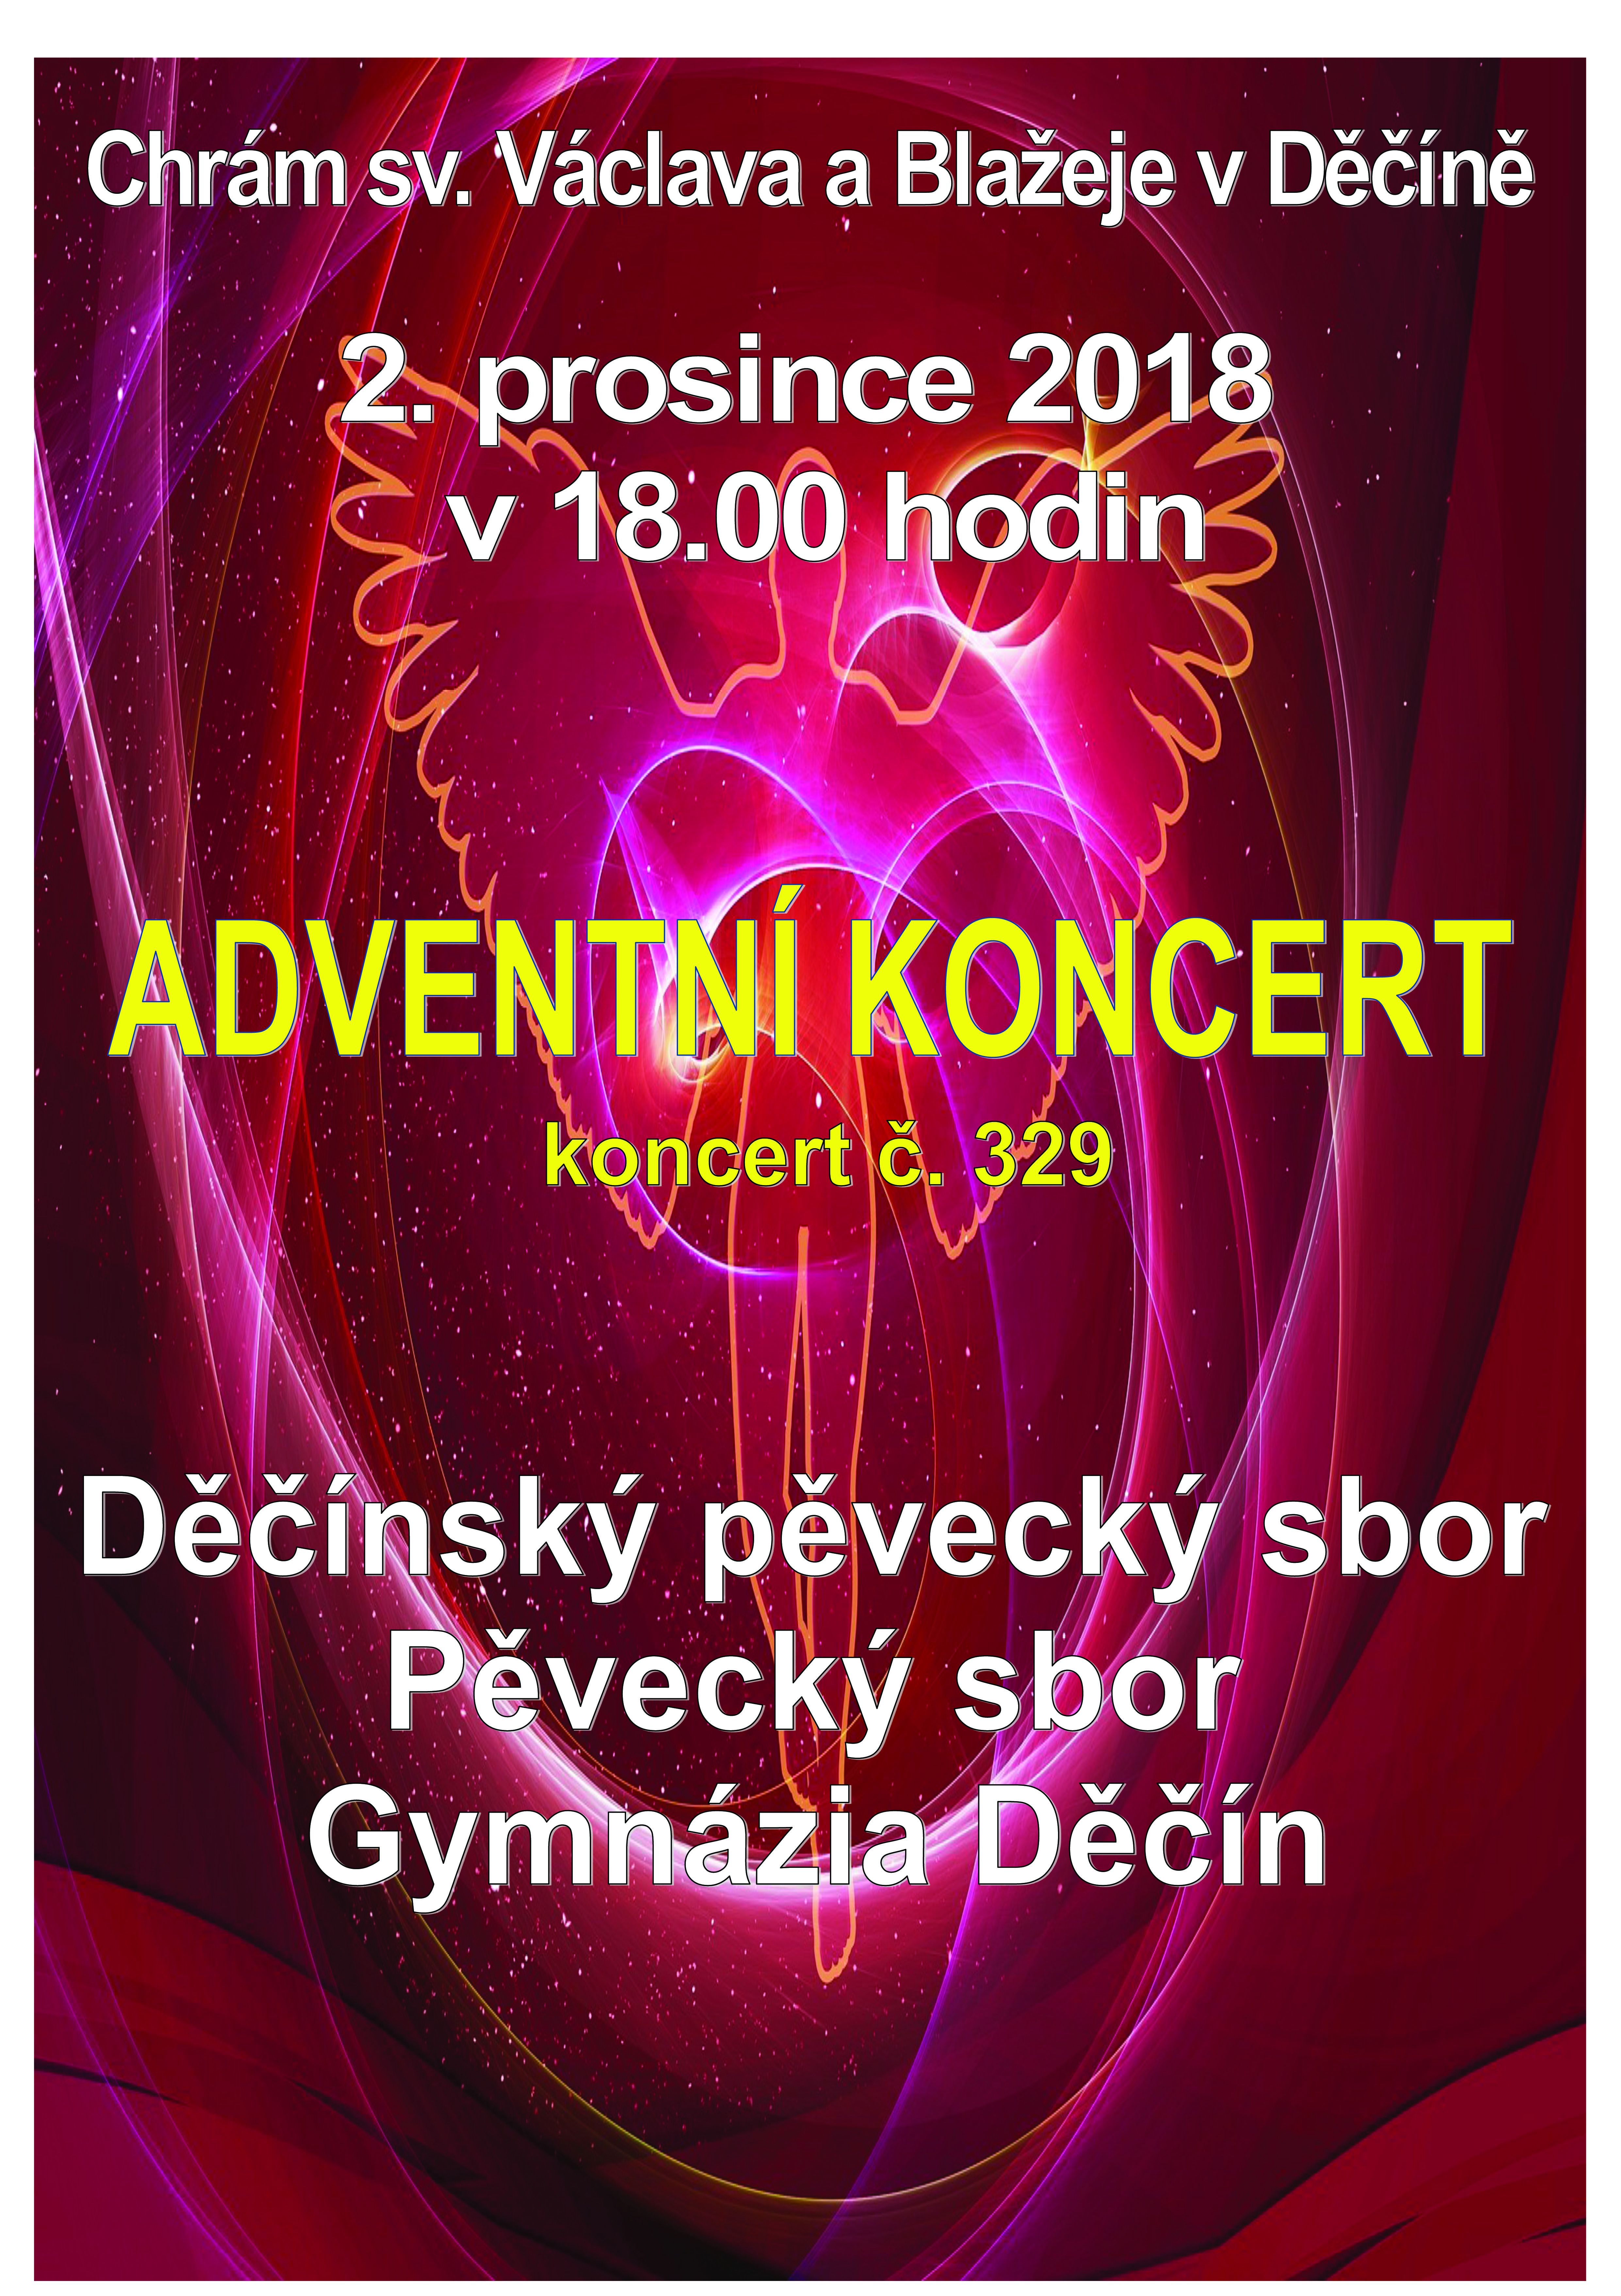 Adventn koncert